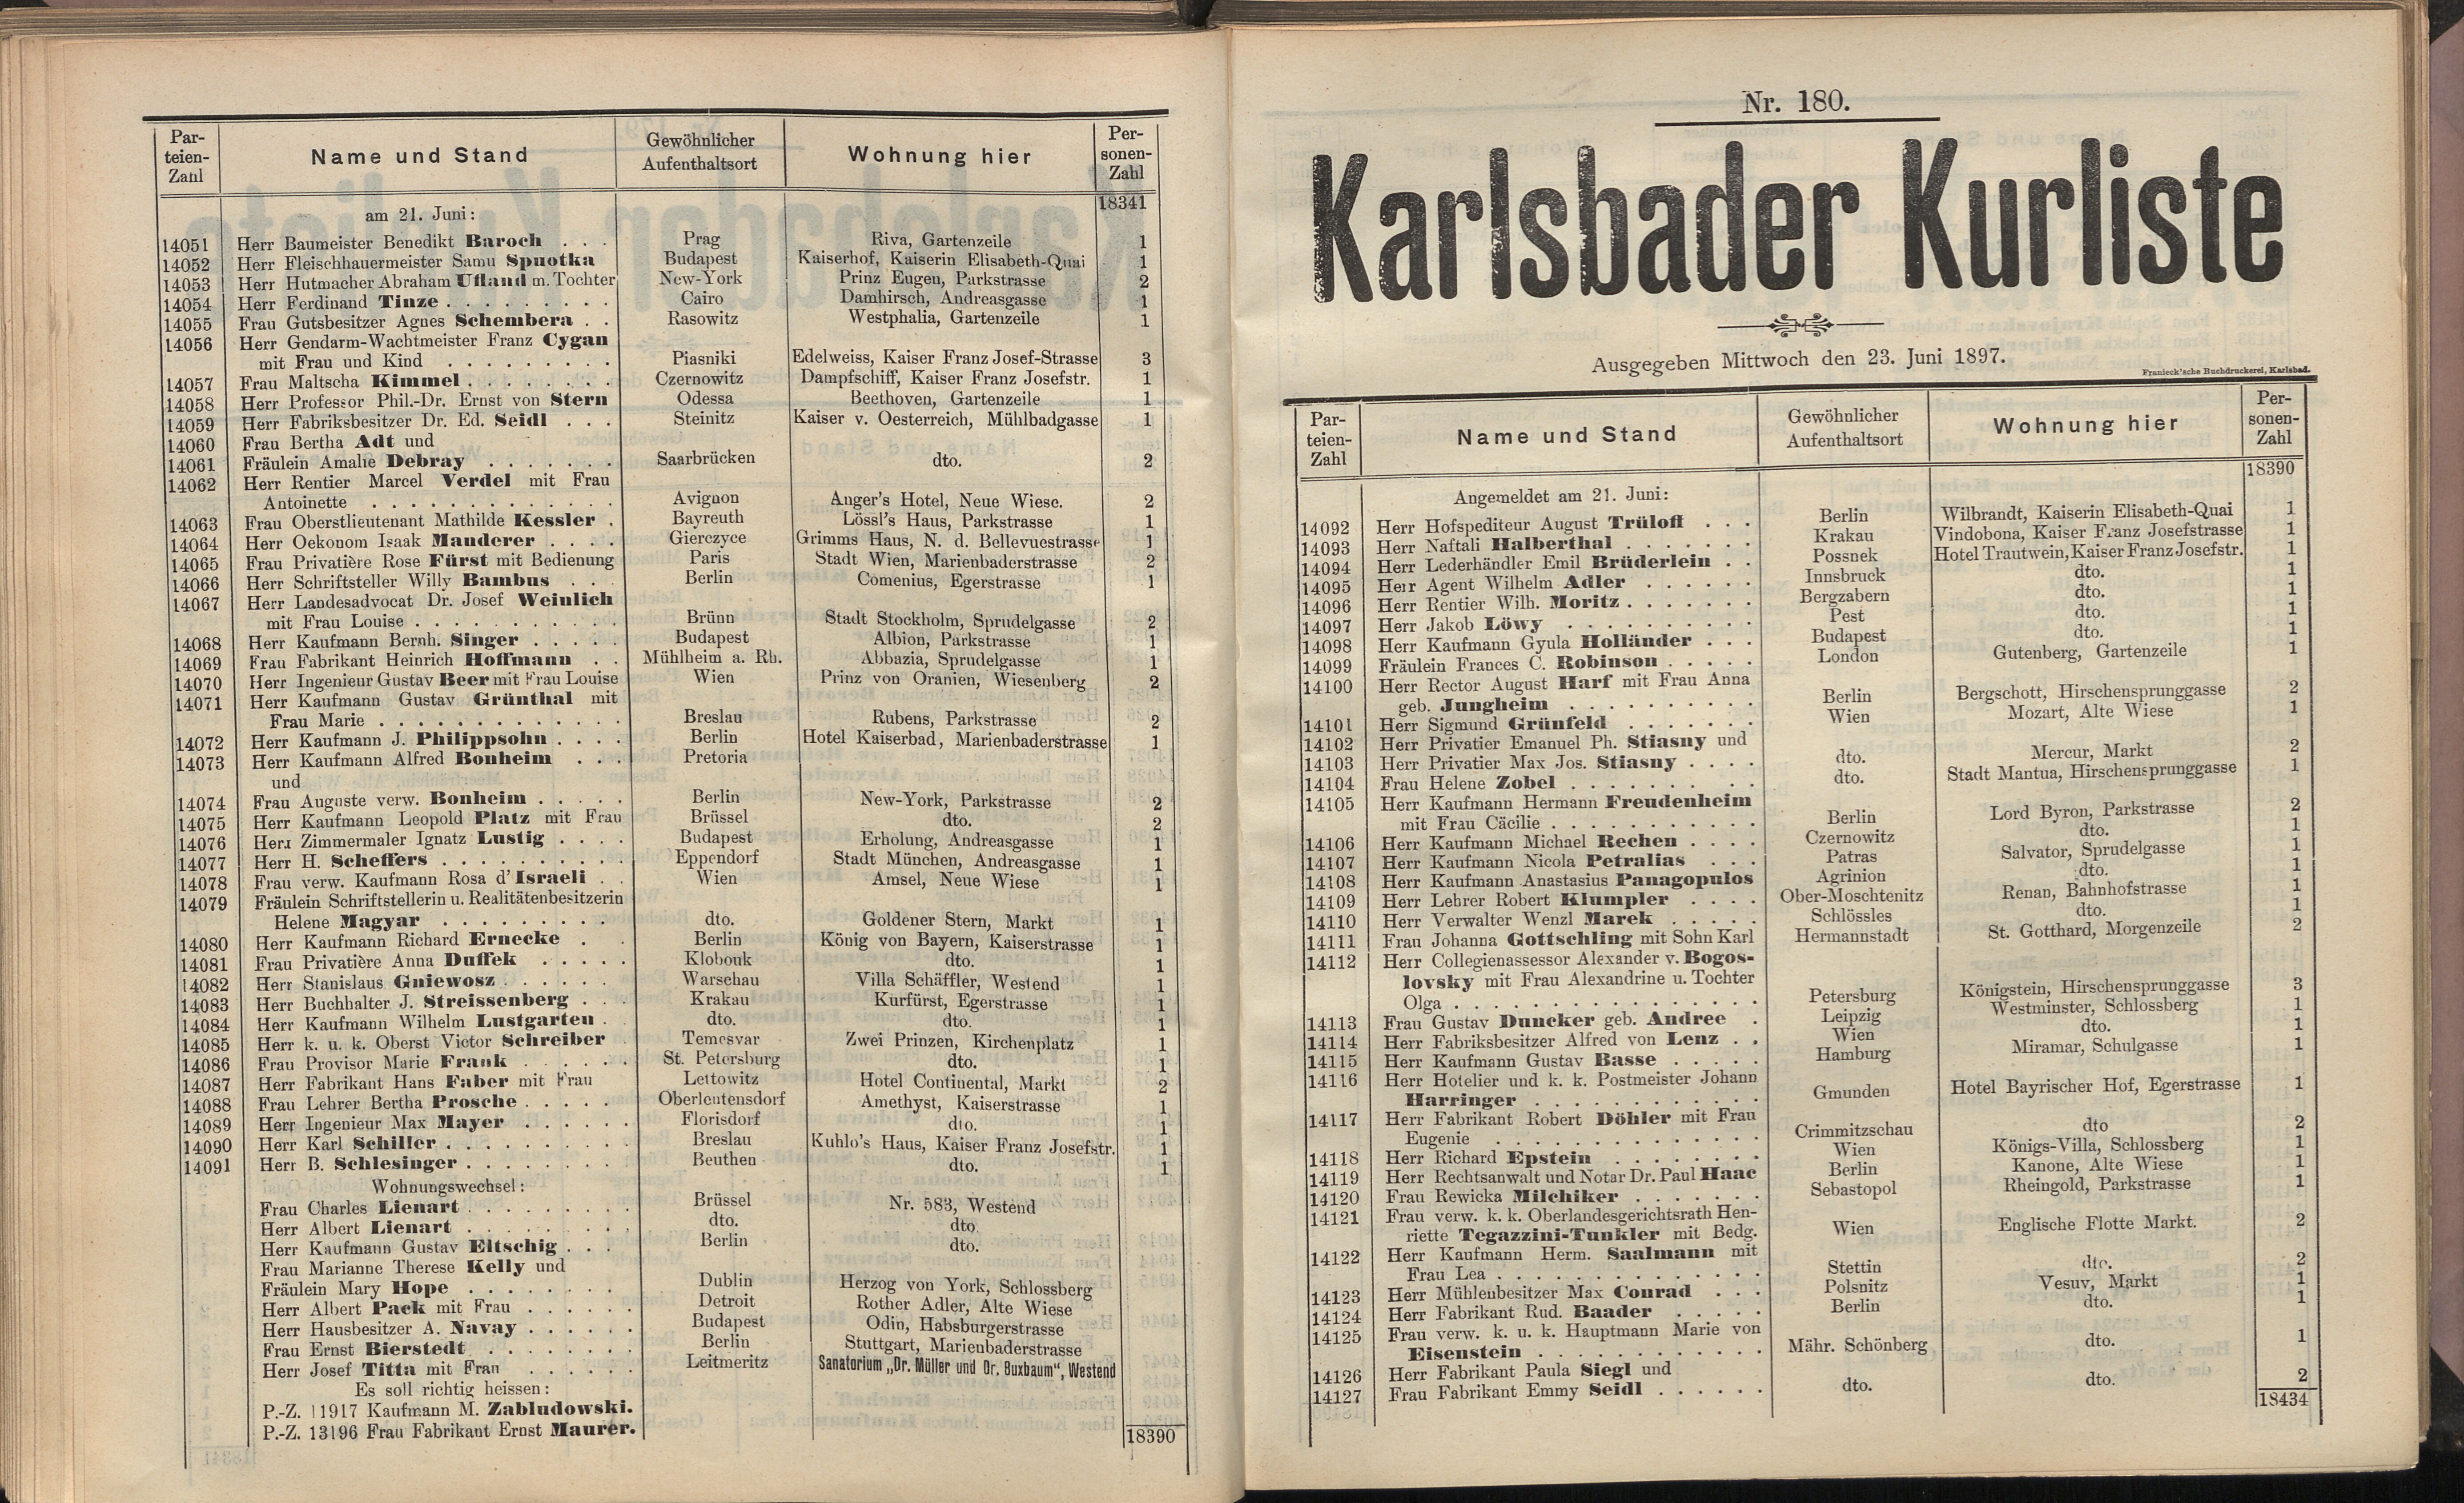 196. soap-kv_knihovna_karlsbader-kurliste-1897_1970